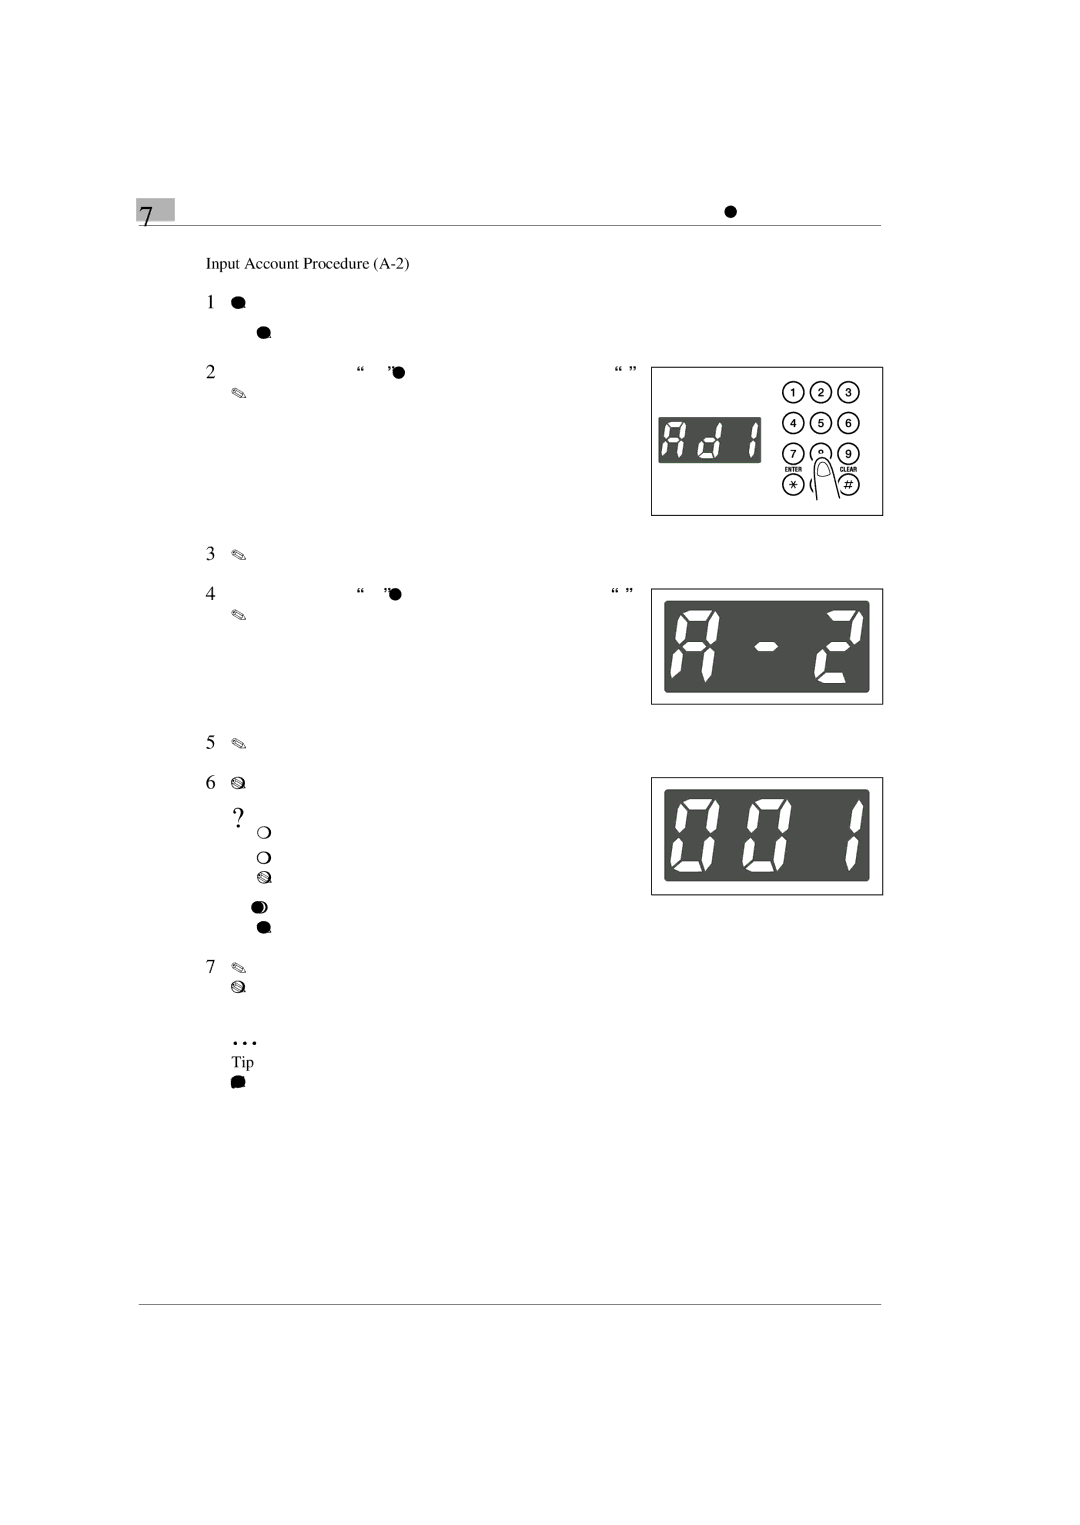 Konica Minolta Printer Copier manual Input Account Procedure A-2, Tip 